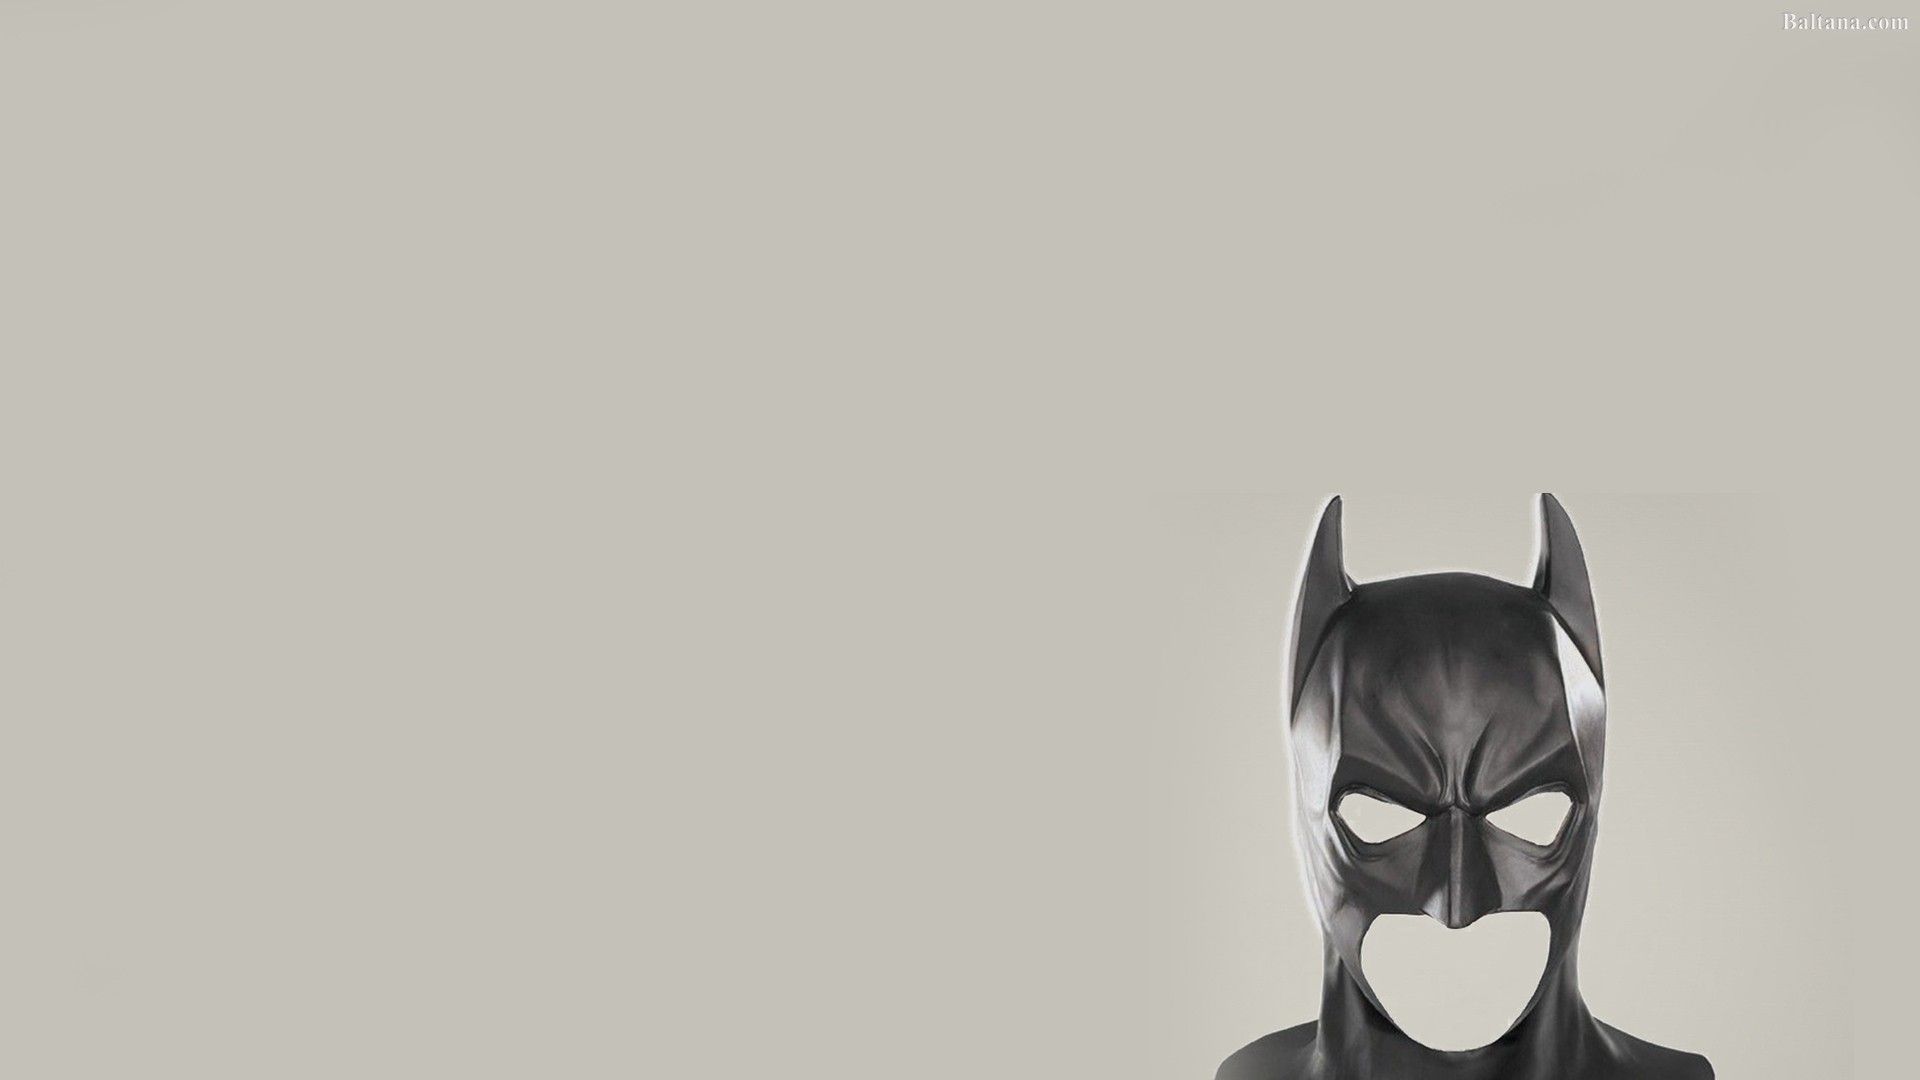 Batman Mask Wallpaper 29590baltana.com